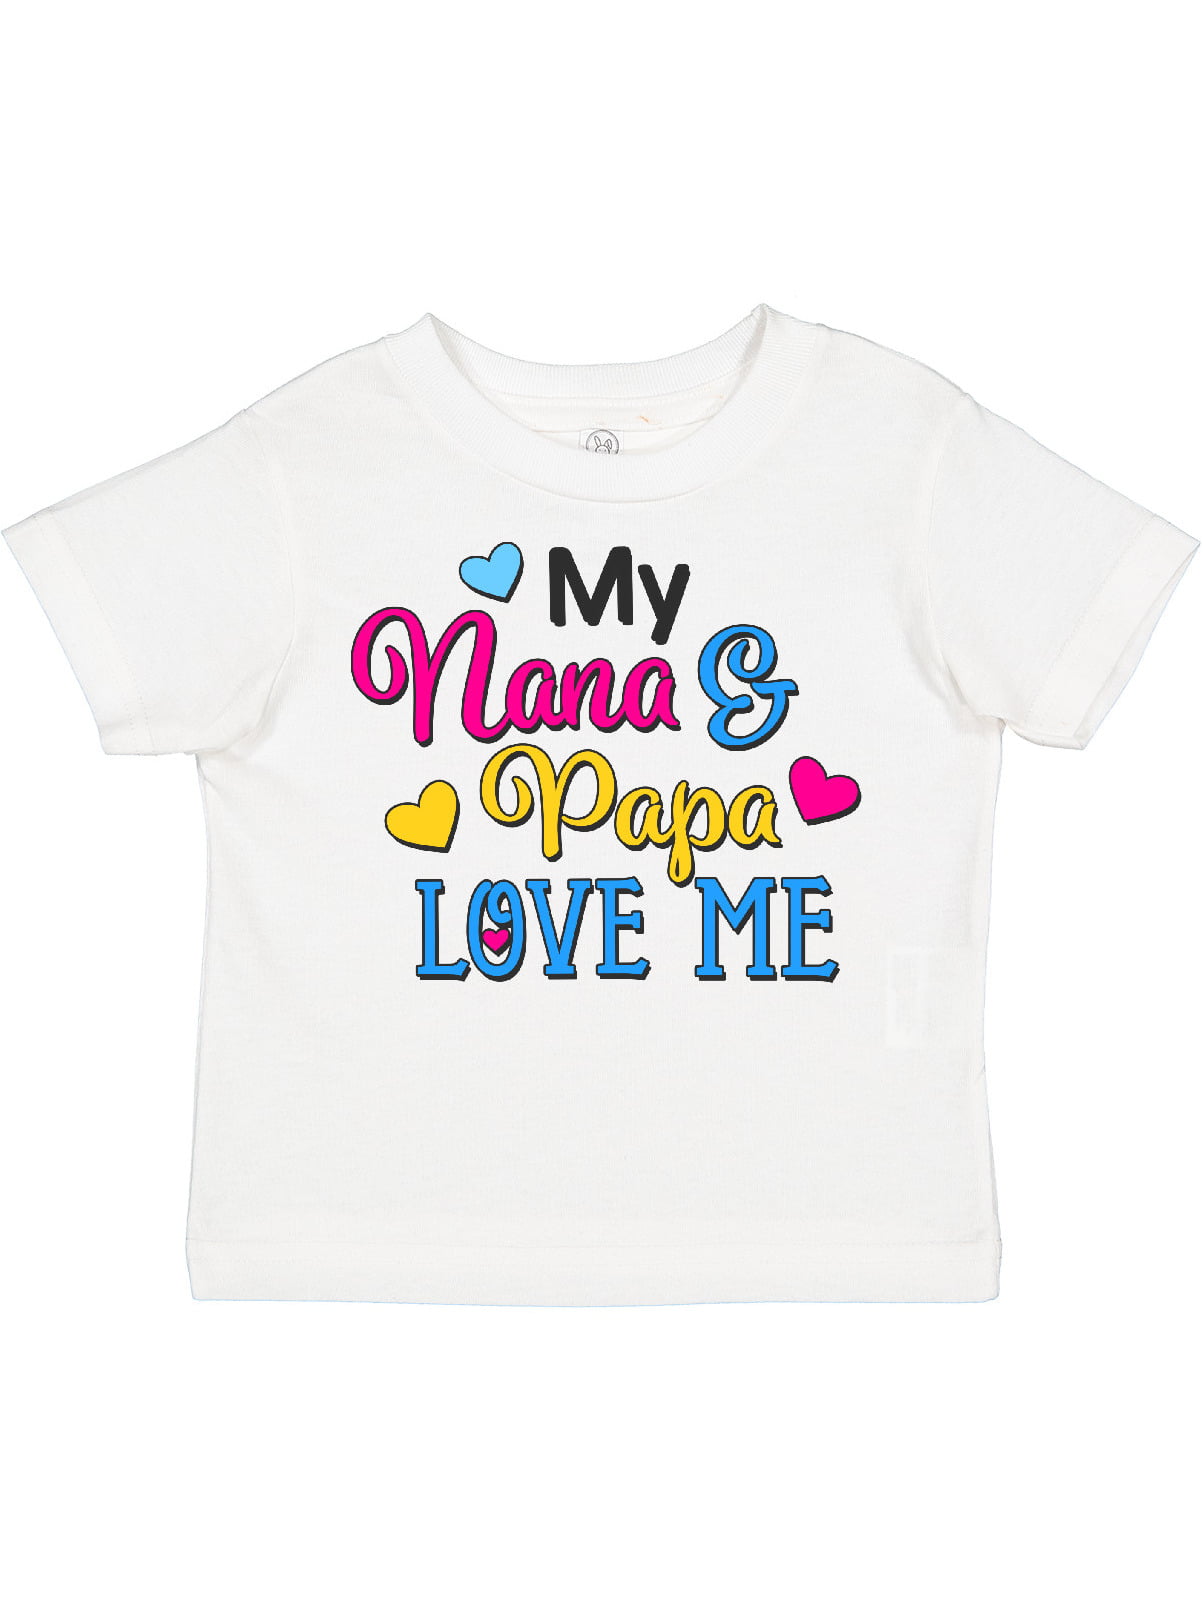 inktastic I Love My Nana Girls Toddler T-Shirt